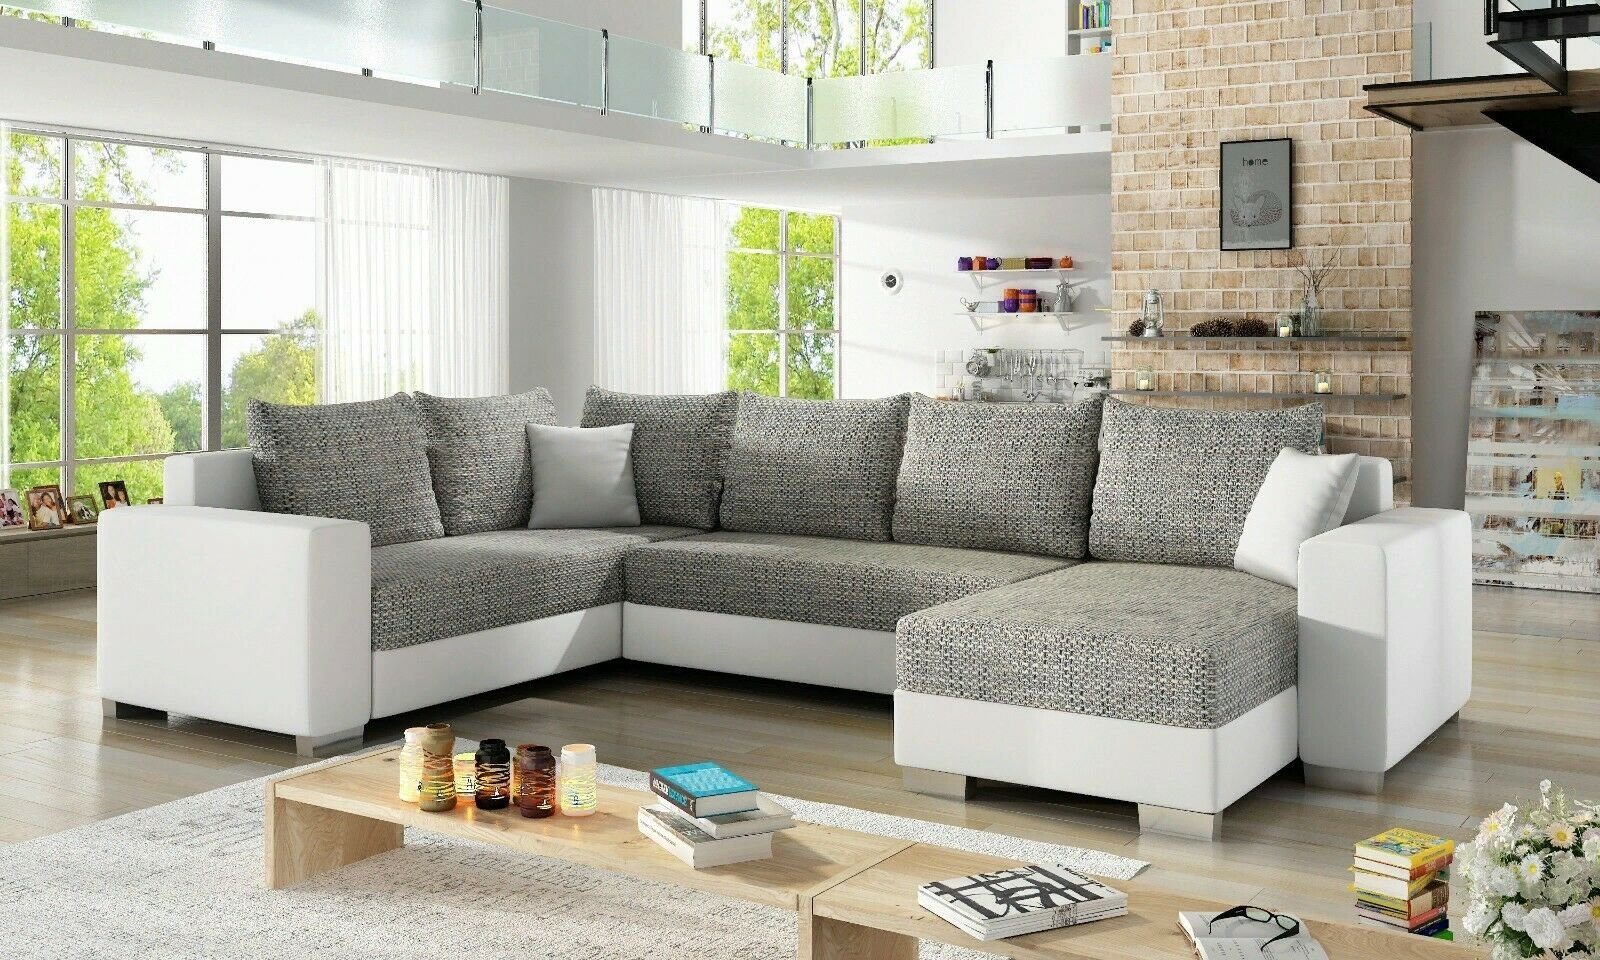 JVmoebel Ecksofa Design Ecksofa Sofa Schlafsofa Bettfunktion Couch Polster Textil, Mit Bettfunktion Hellgrau / Weiß